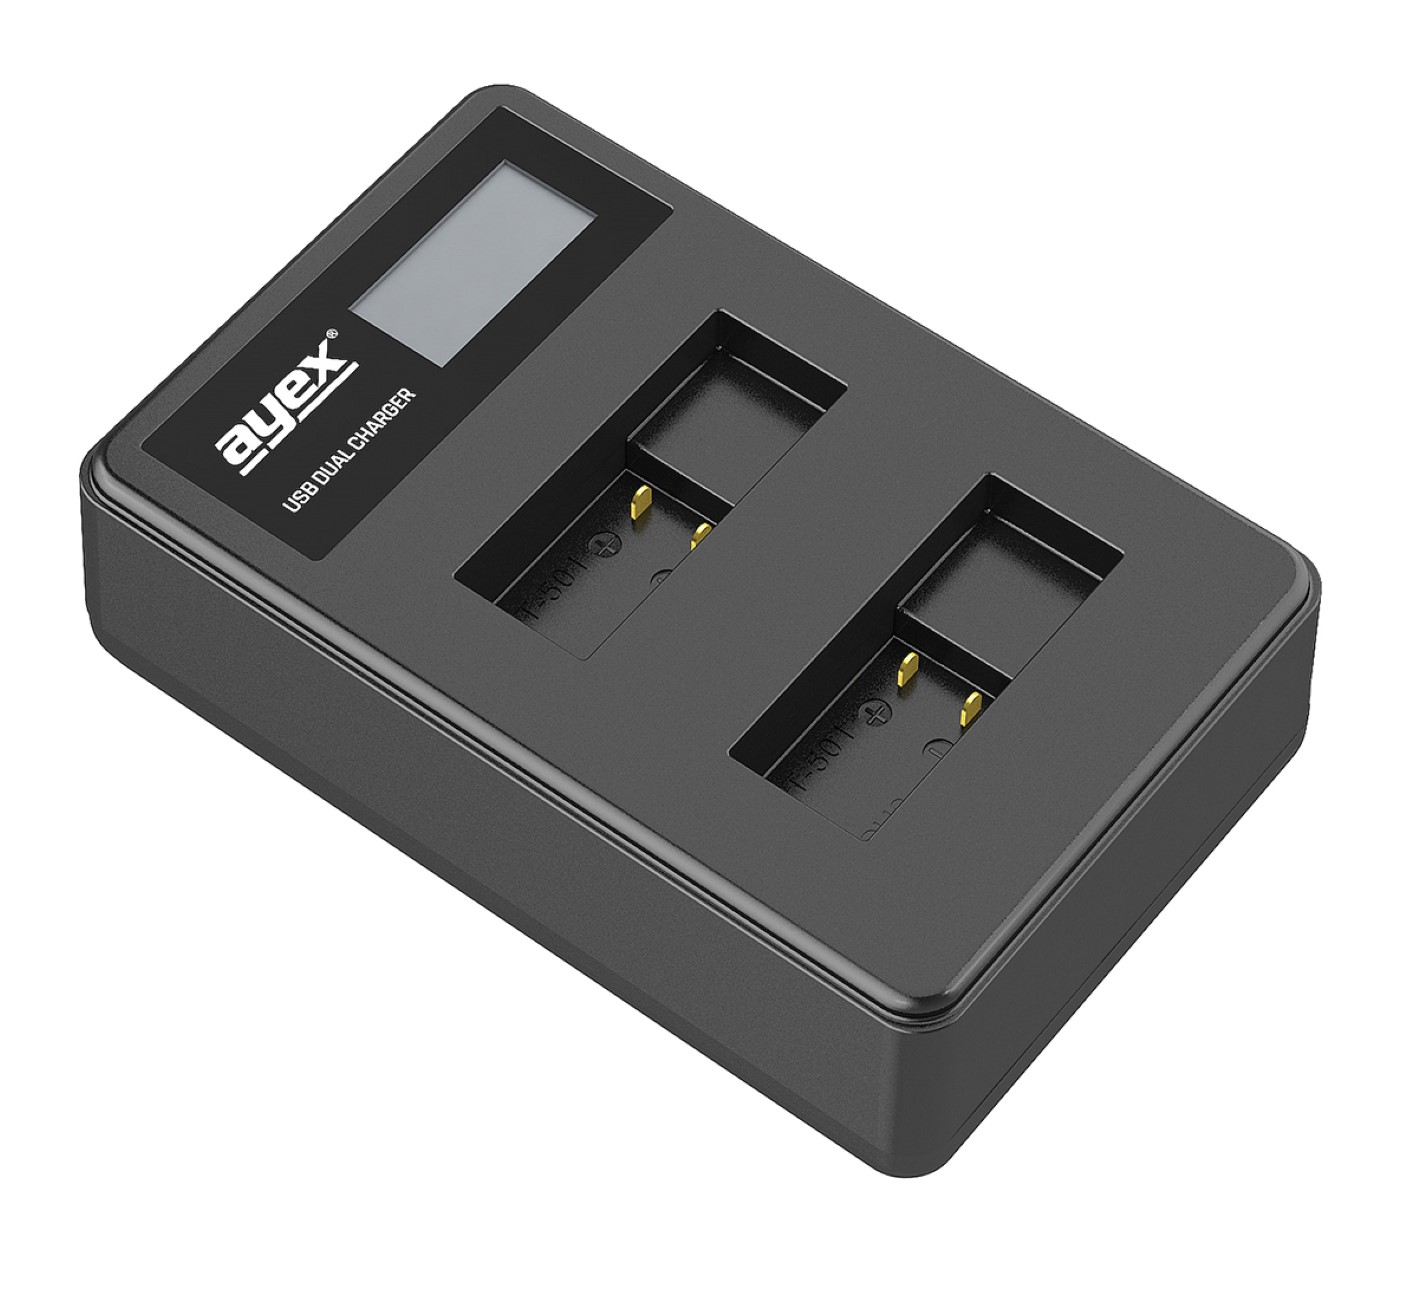 AYEX für Silver, AHDBT-501 Black Dual USB 8 Hero GoPro Akkus Ladegerät 6 GoPro Lader, Kamera-Akku 5 Black für 7